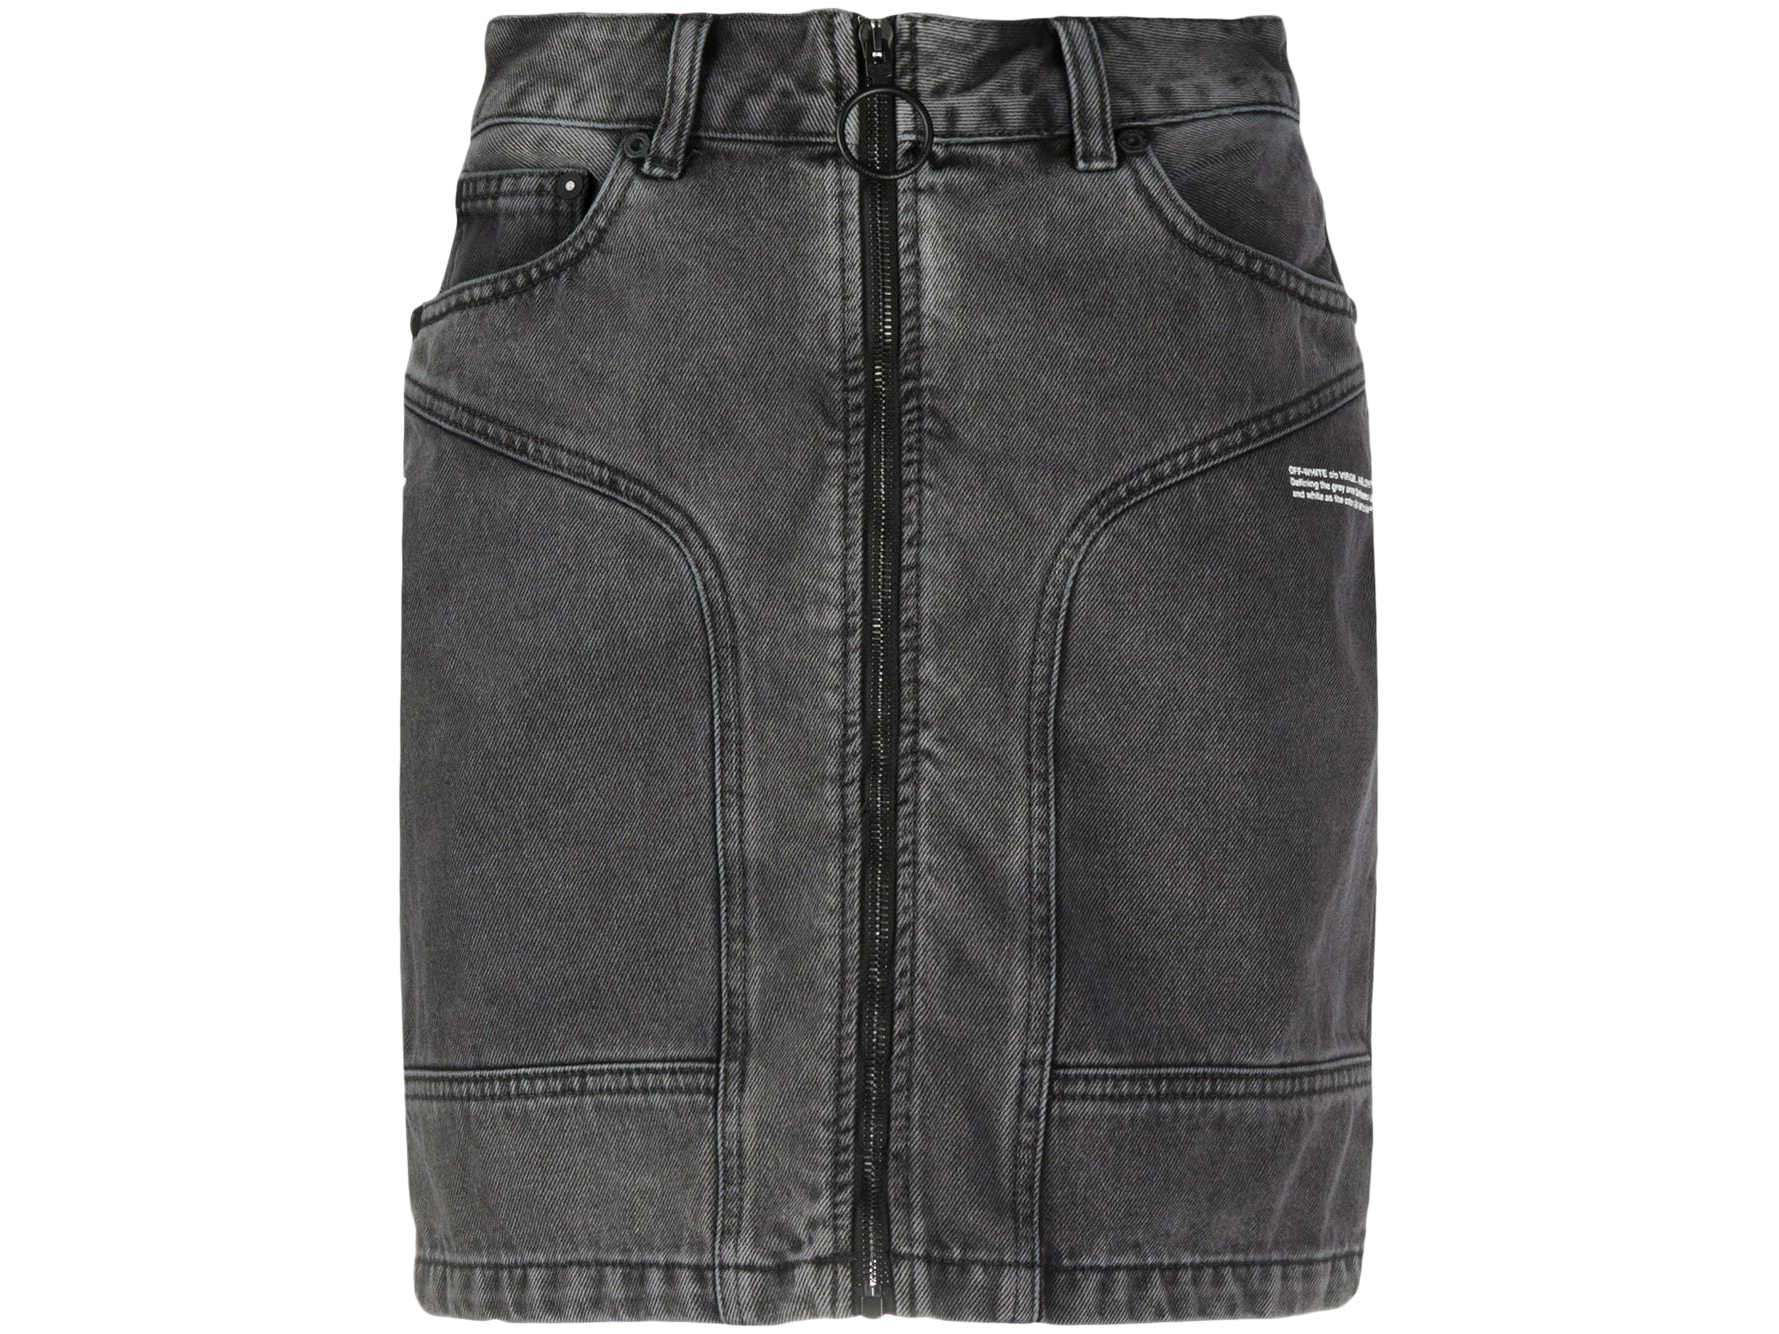 Shop Carolina Skirt - Dark Grey from HERSKIND at Seezona | Seezona